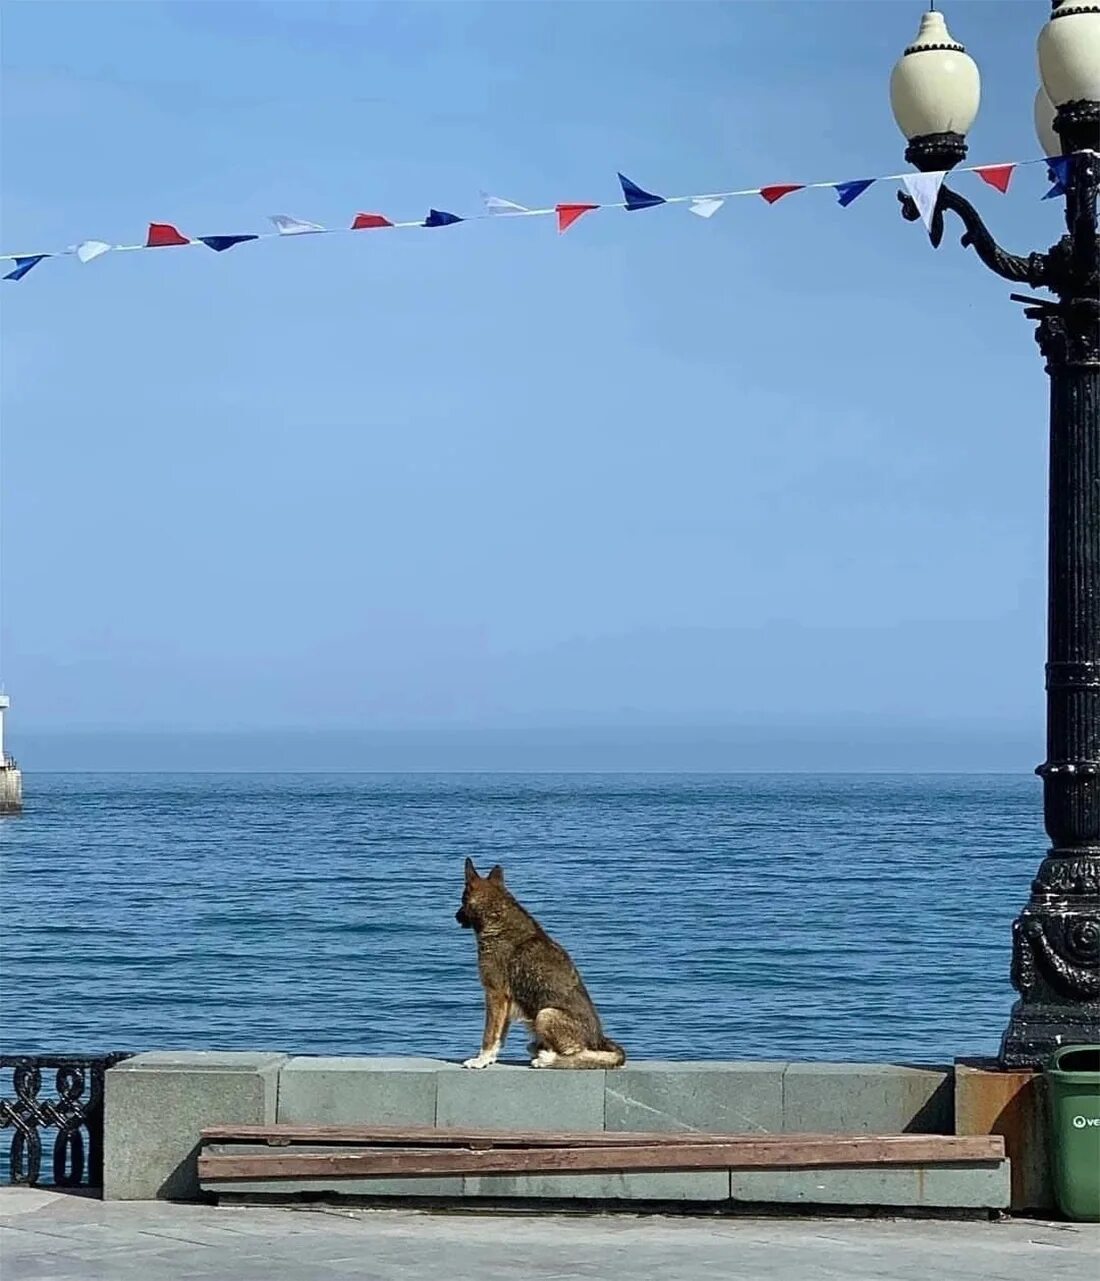 Город где снимали пса. Крымский Хатико Мухтар. Мухтар Ялта. Мухтар набеое Ялта набережная. Собака на набережной Ялты.